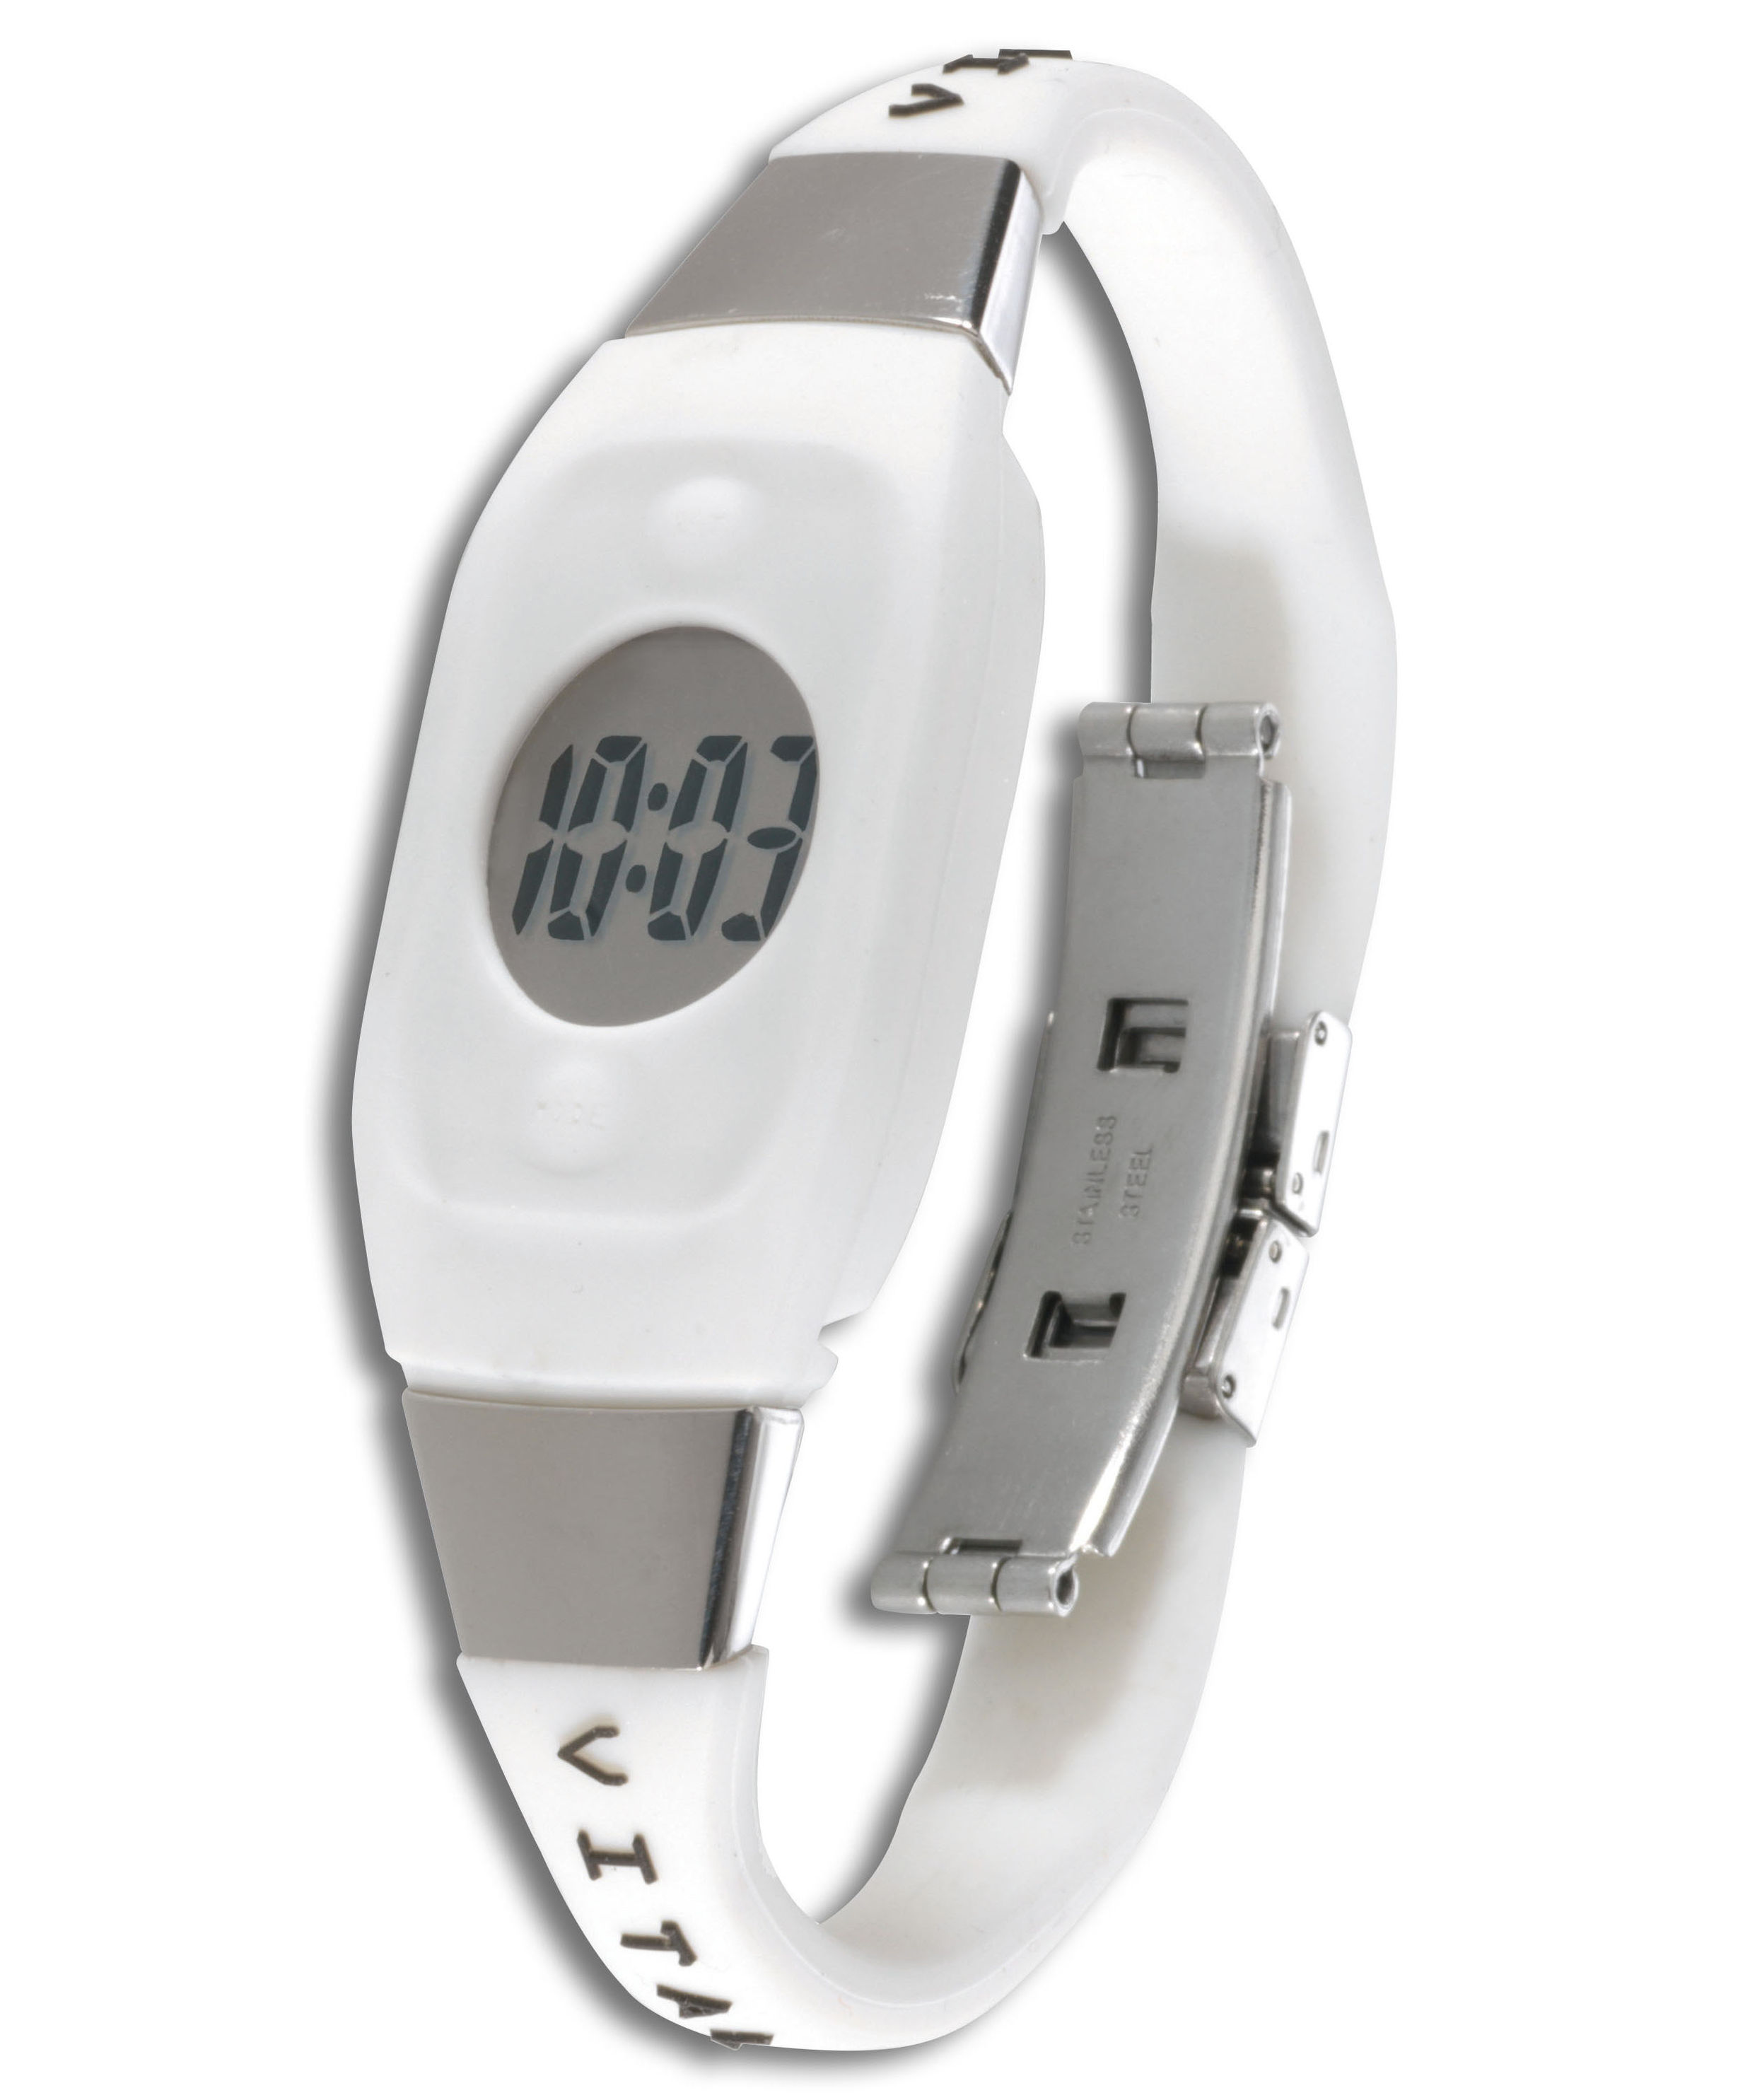 Vitalmaxx Armbanduhr Farbe: weiß jetzt bei Weltbild.de bestellen